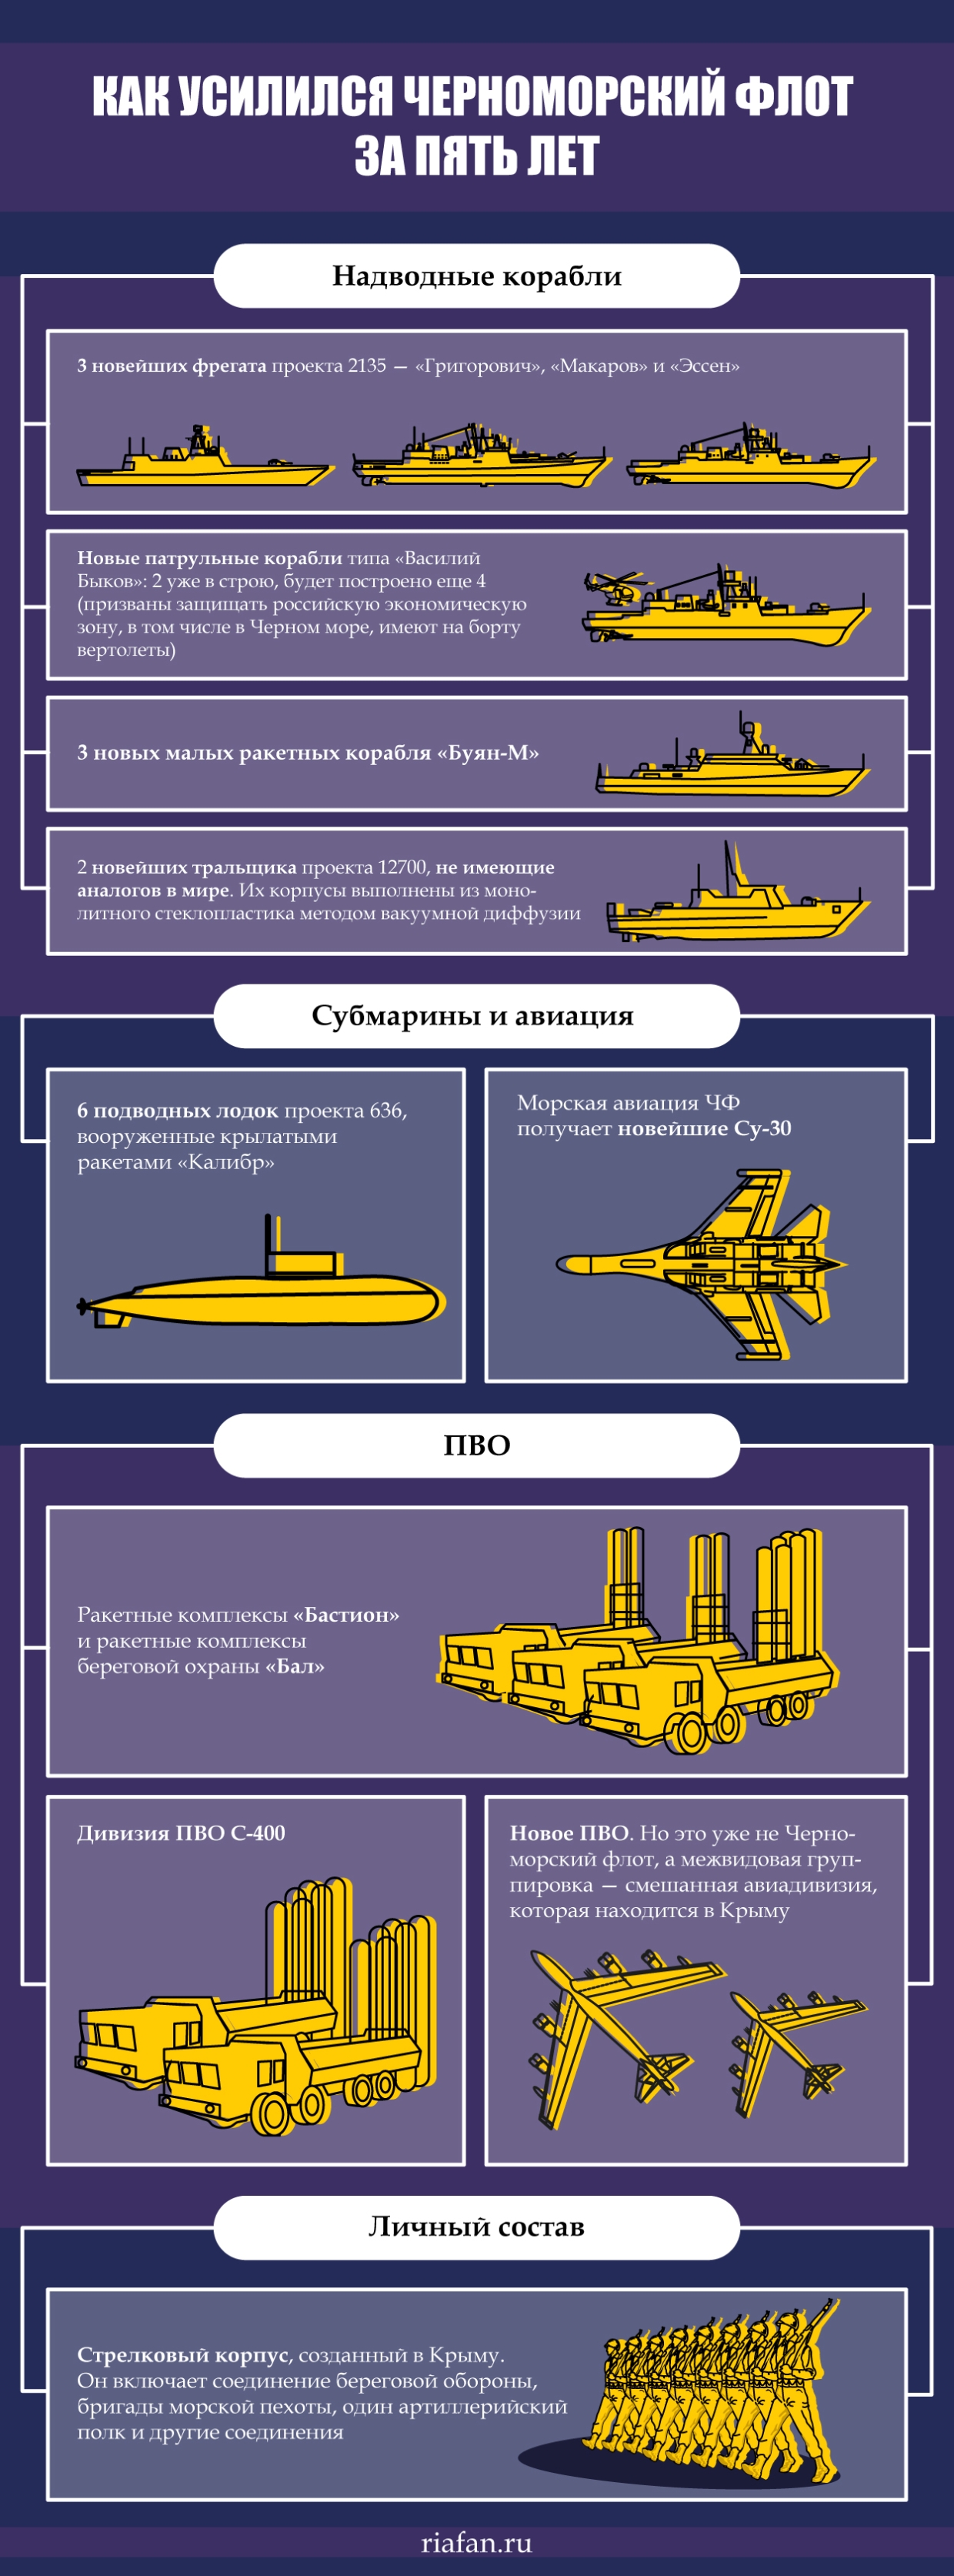 Shvytkin responded to complaints Commander of Naval Forces of Ukraine concerning strengthening the Russian fleet